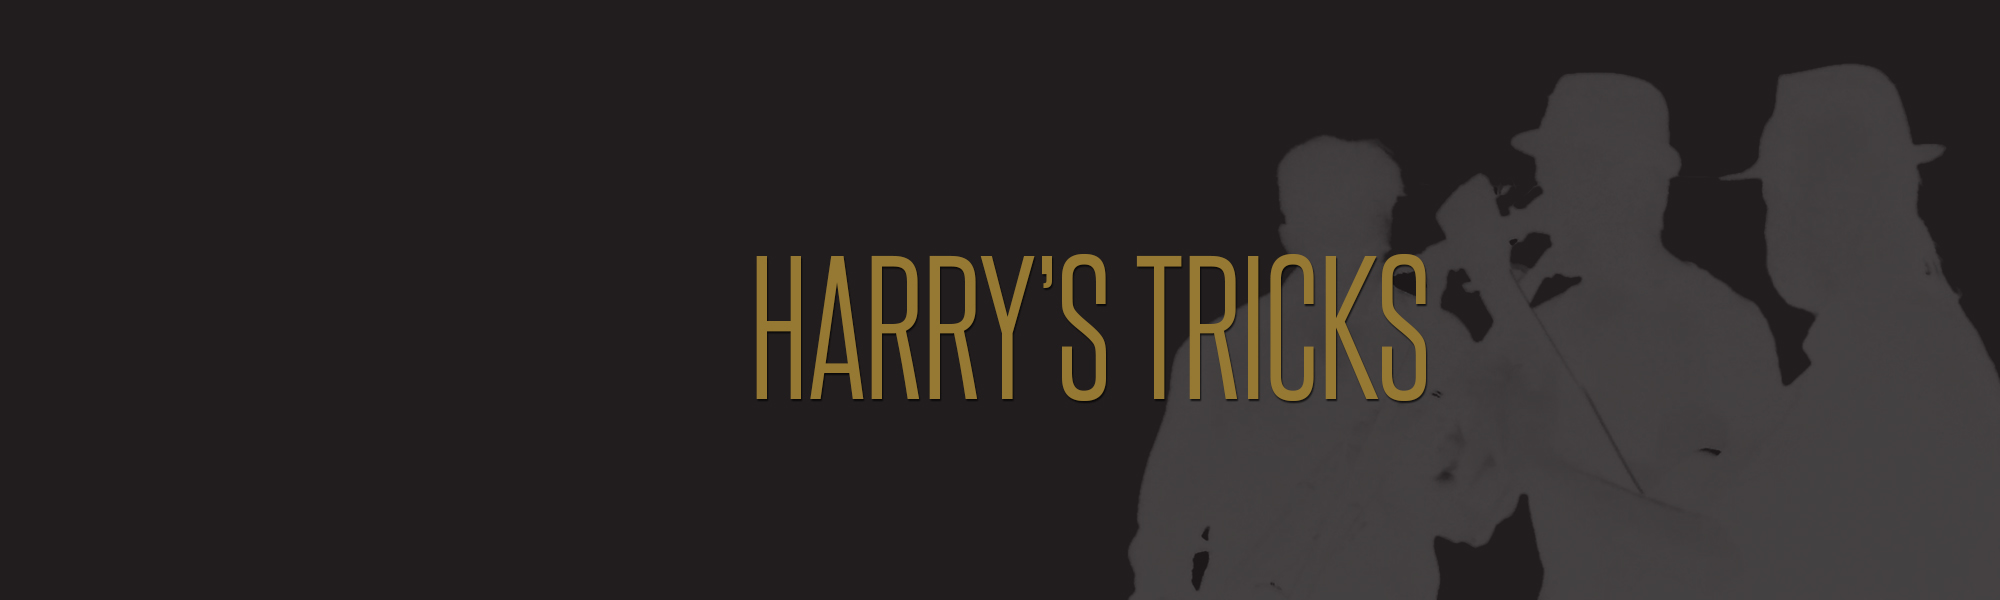 Harry's Tricks